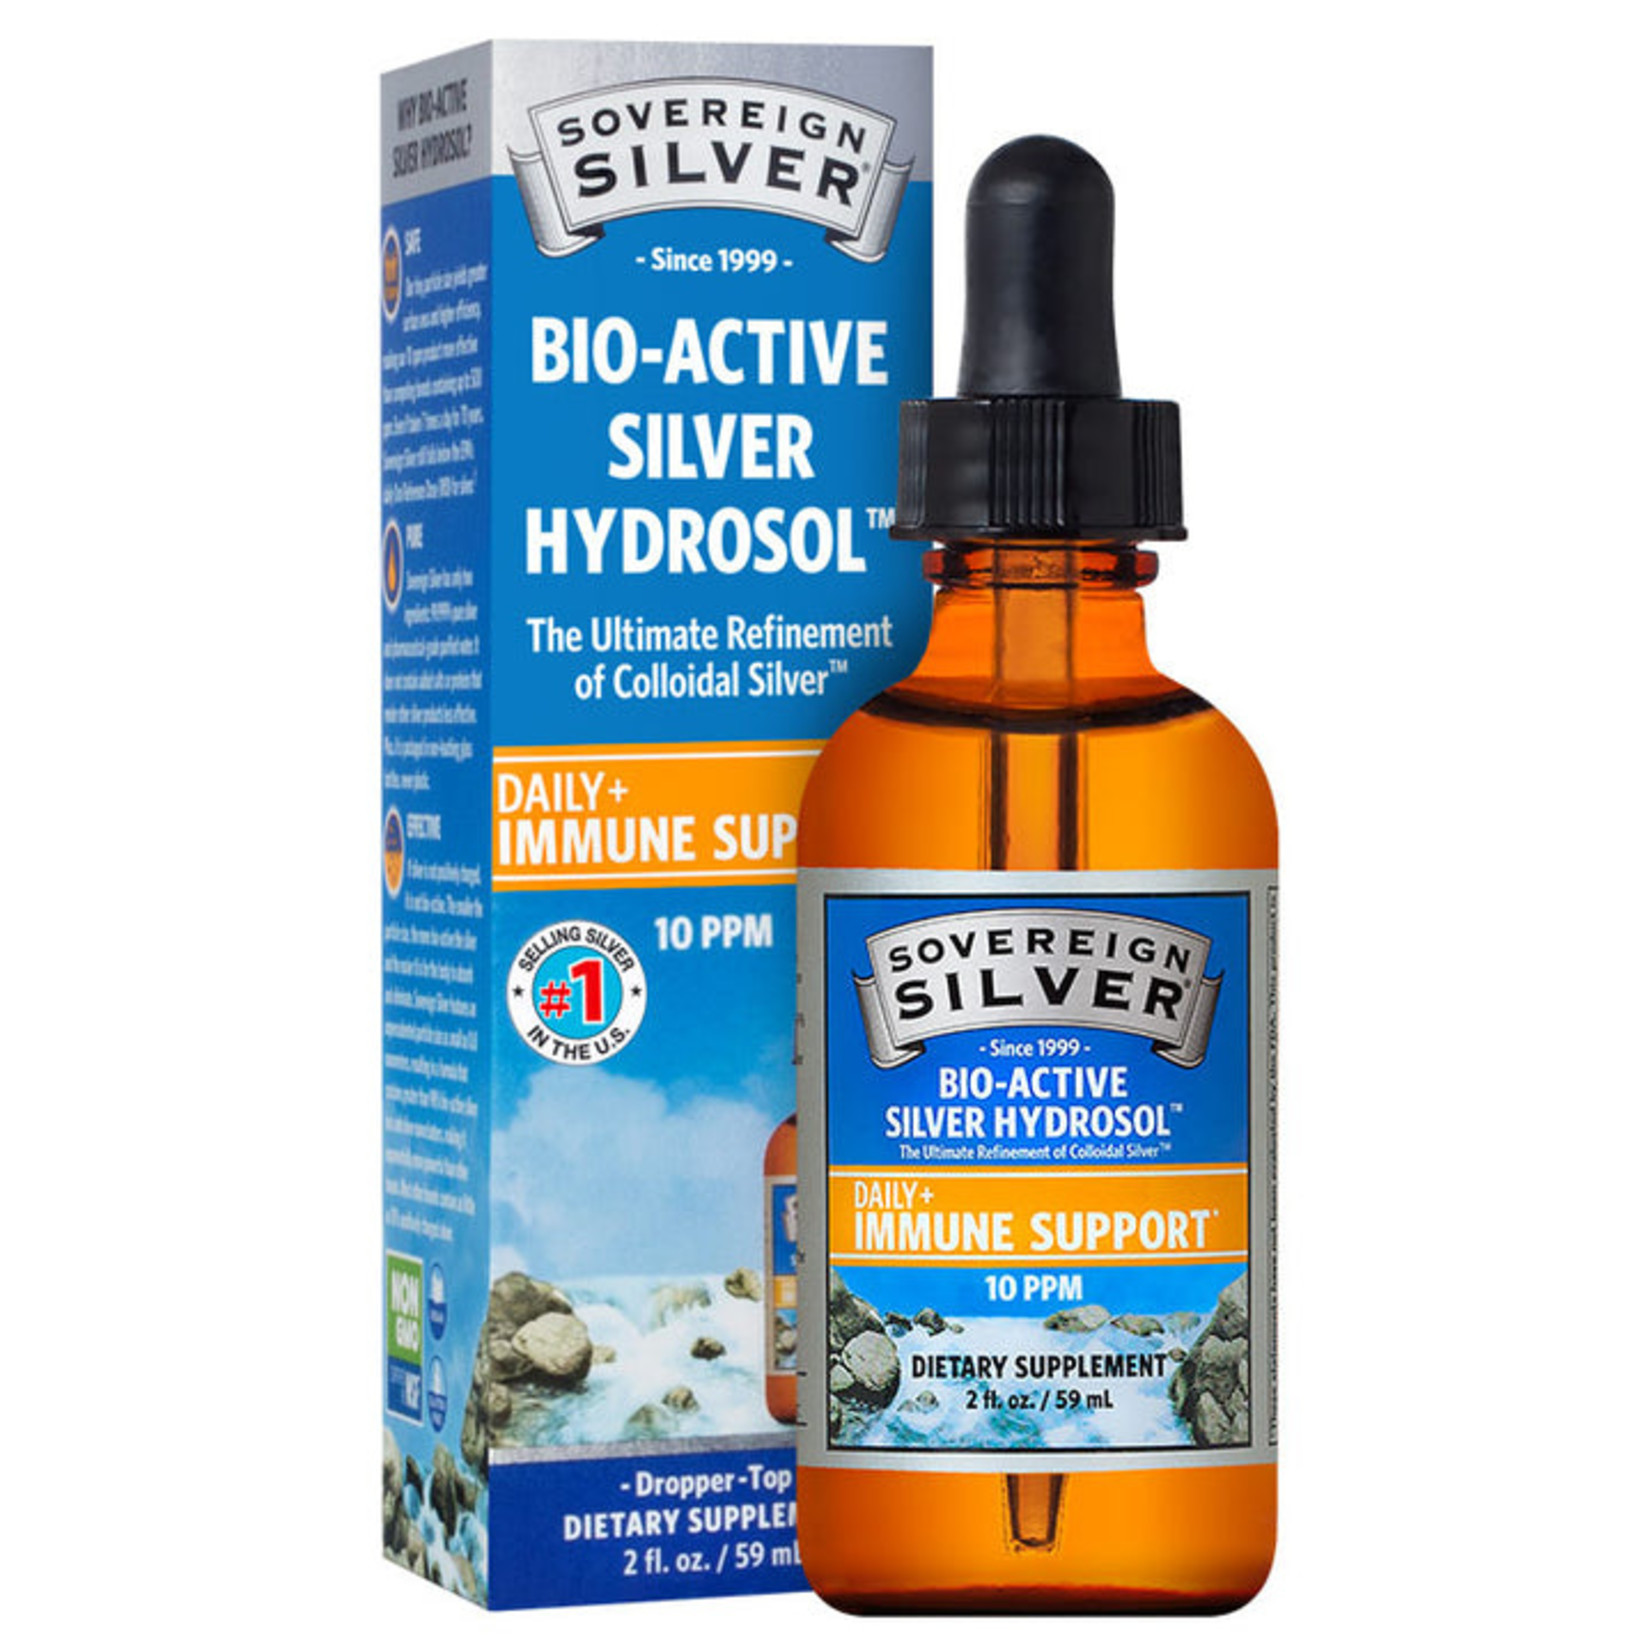 Sovereign Silver Sovereign Silver - Bio-Active Silver Hydrosol Dropper-Top - 2 oz dropper